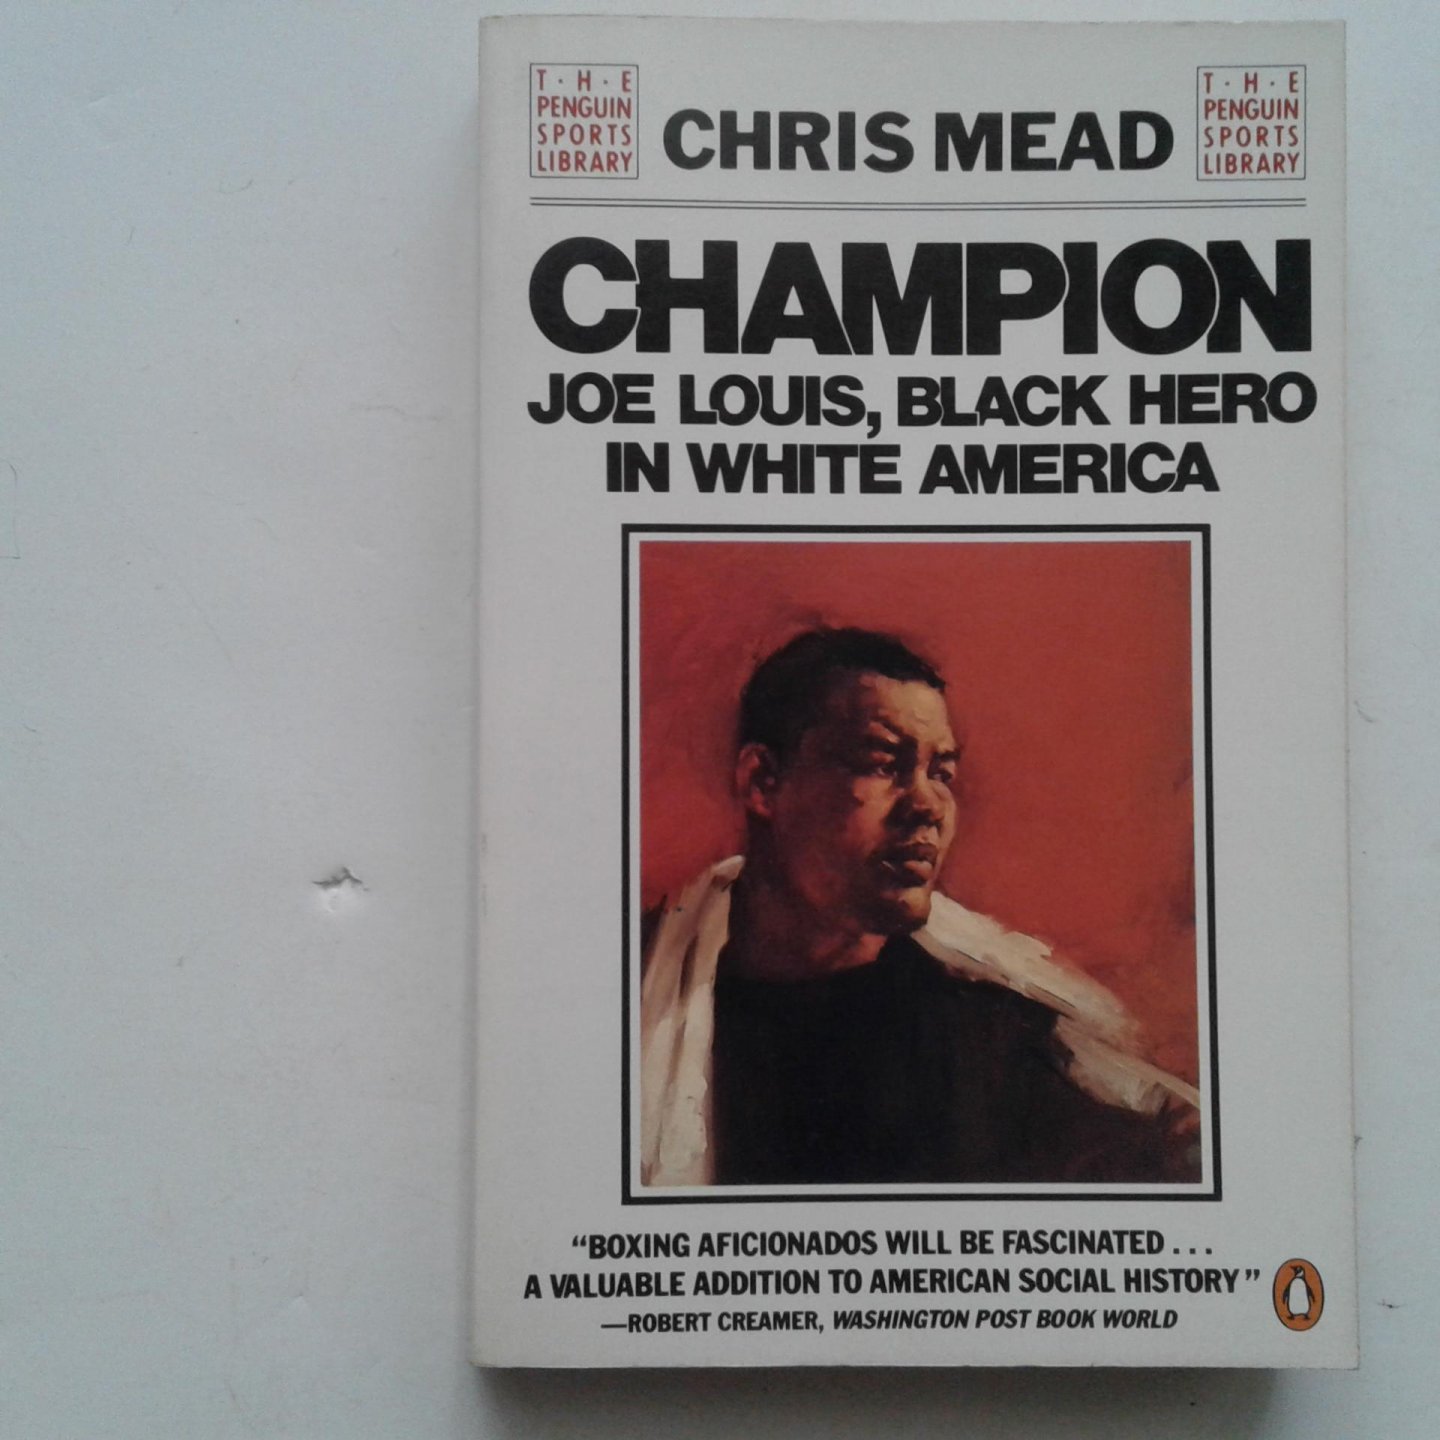 Mead, Chris - Champion ; Joe Louis, Black Hero in White America